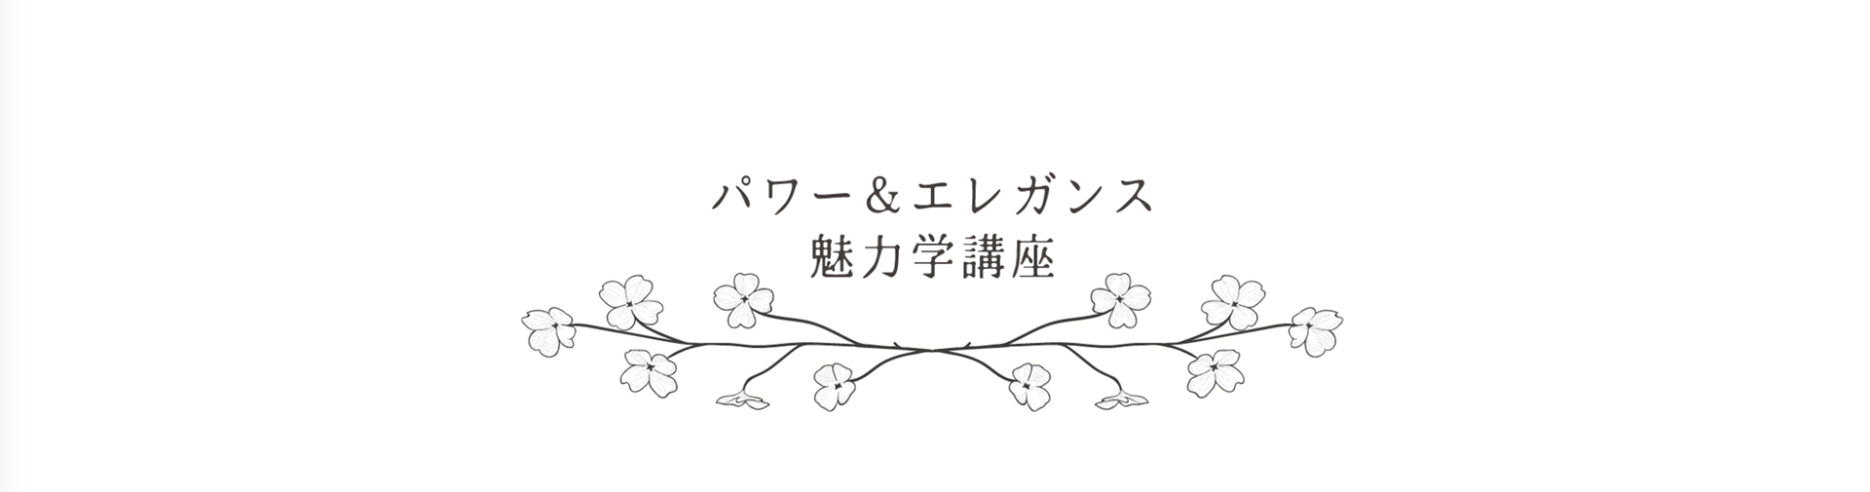 C Smile5 - ホームページ制作事例。仙台の魅力学・女性企業コンサルティングの合同会社C.Smile様